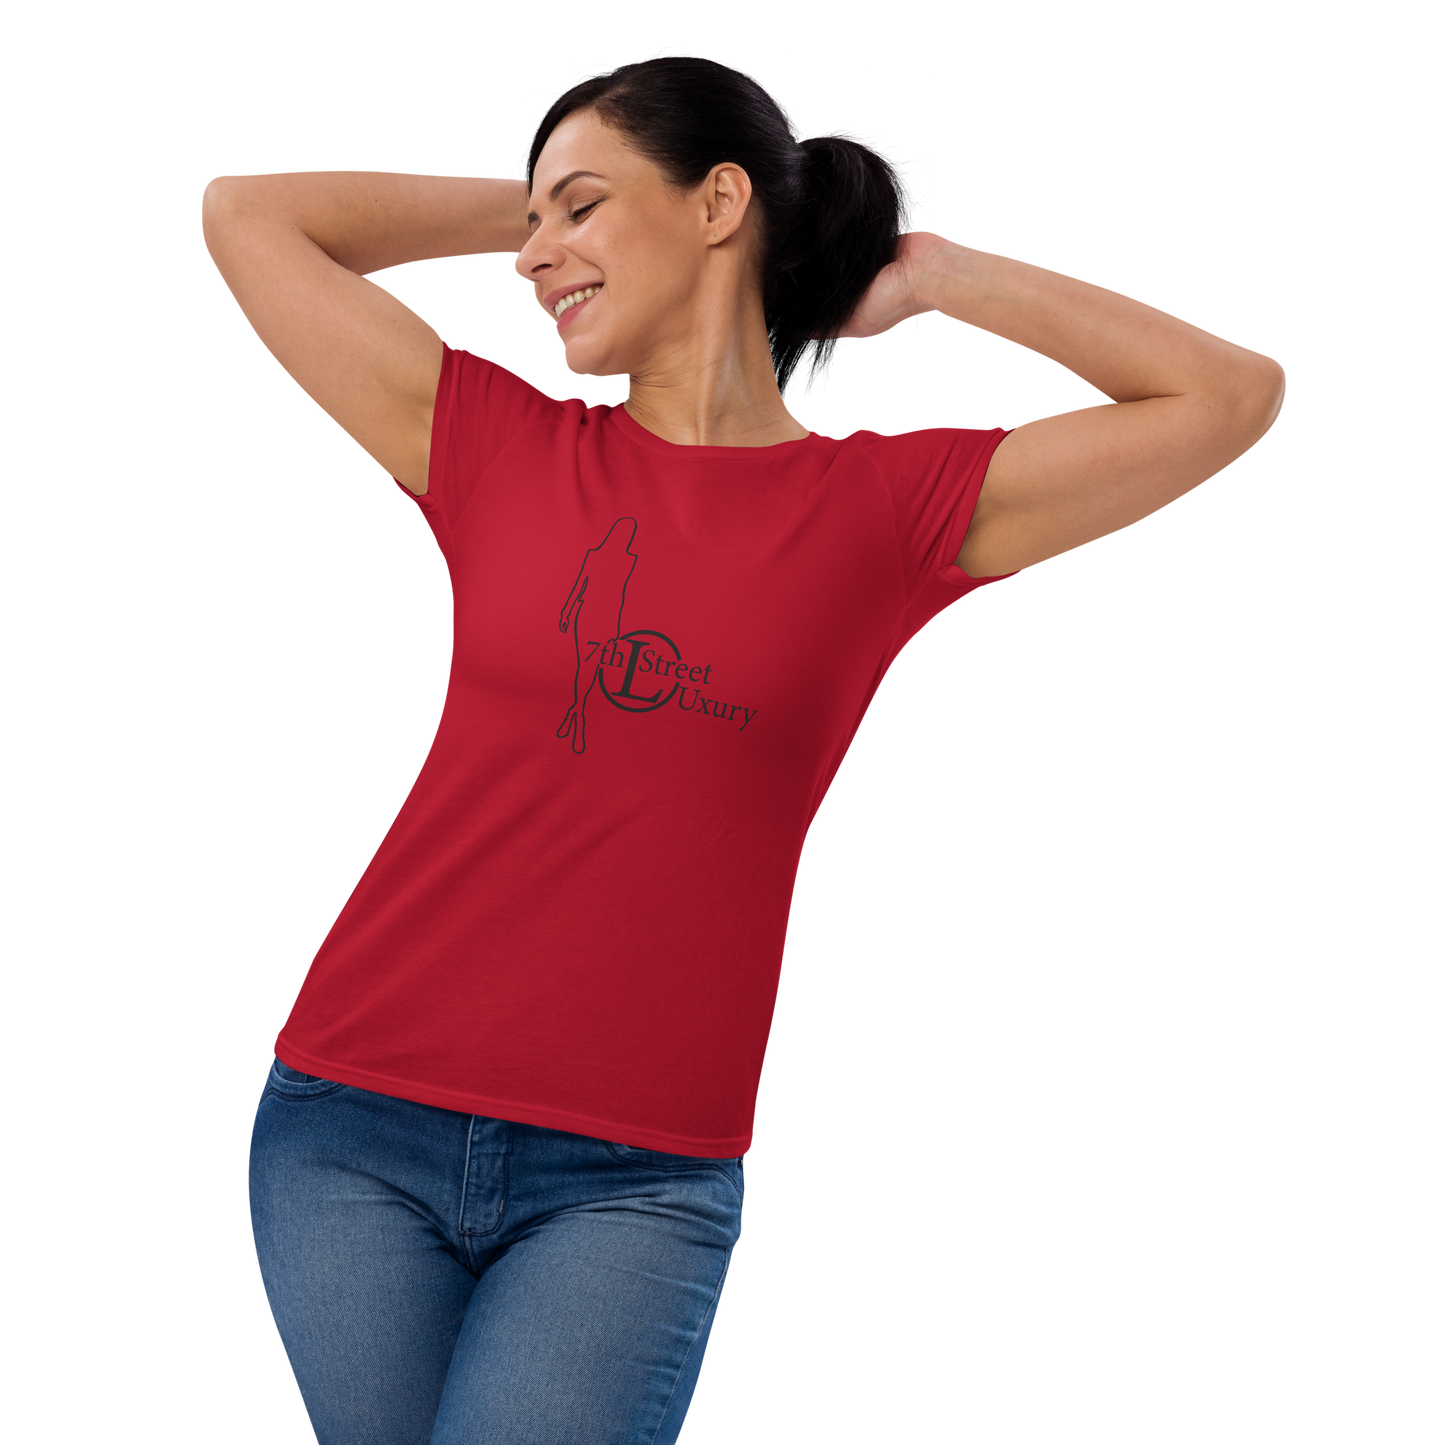 7thStreet Luxury Women's short sleeve t-shirt